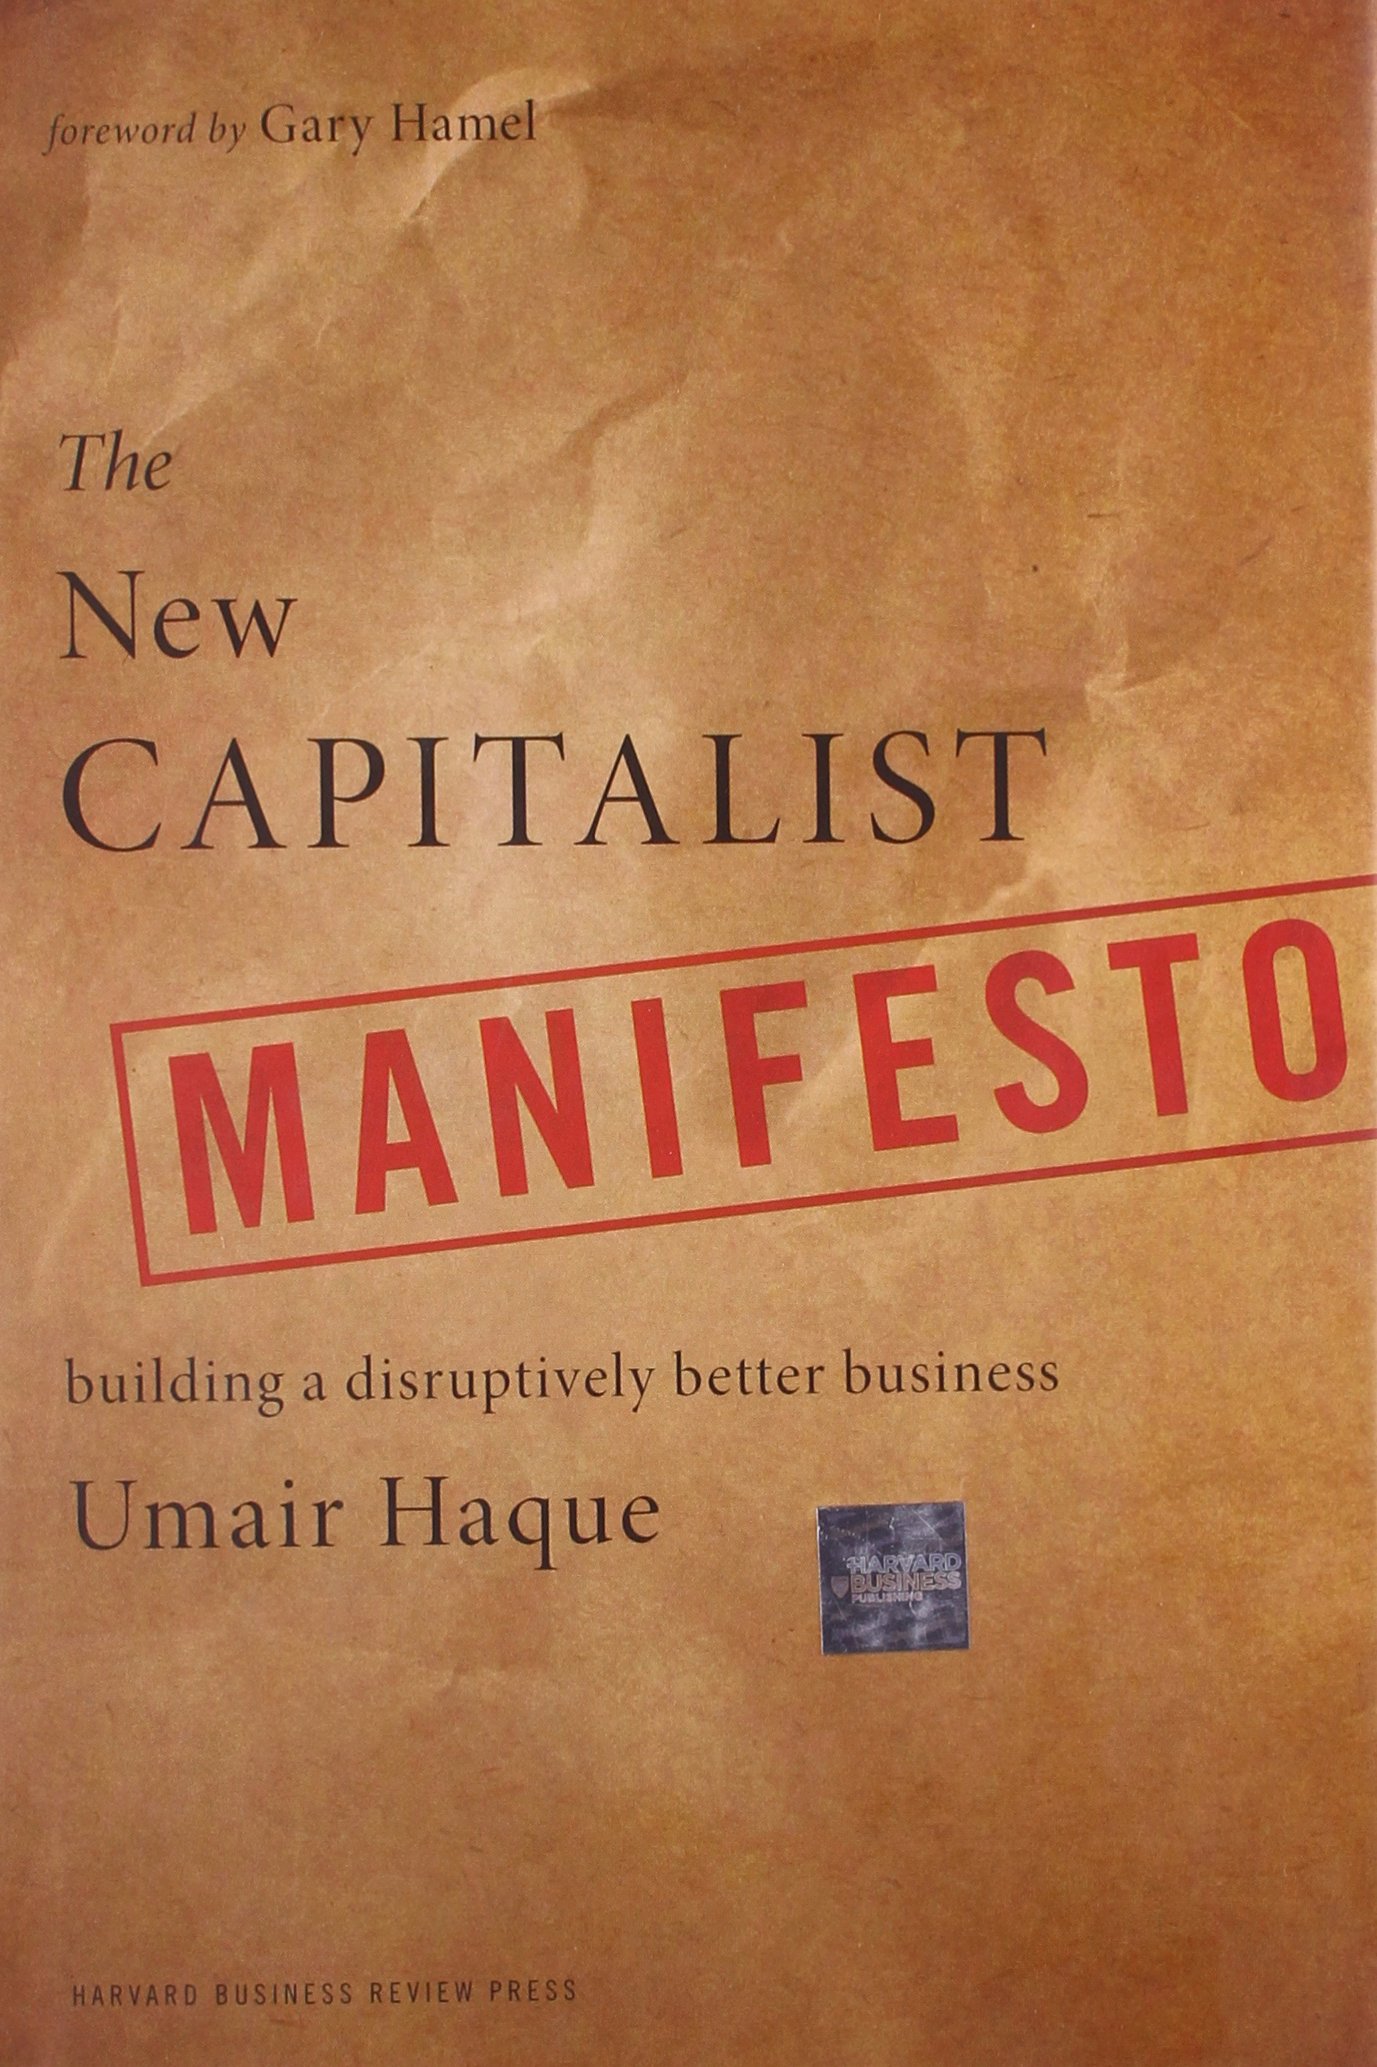 The new capitalist manifesto